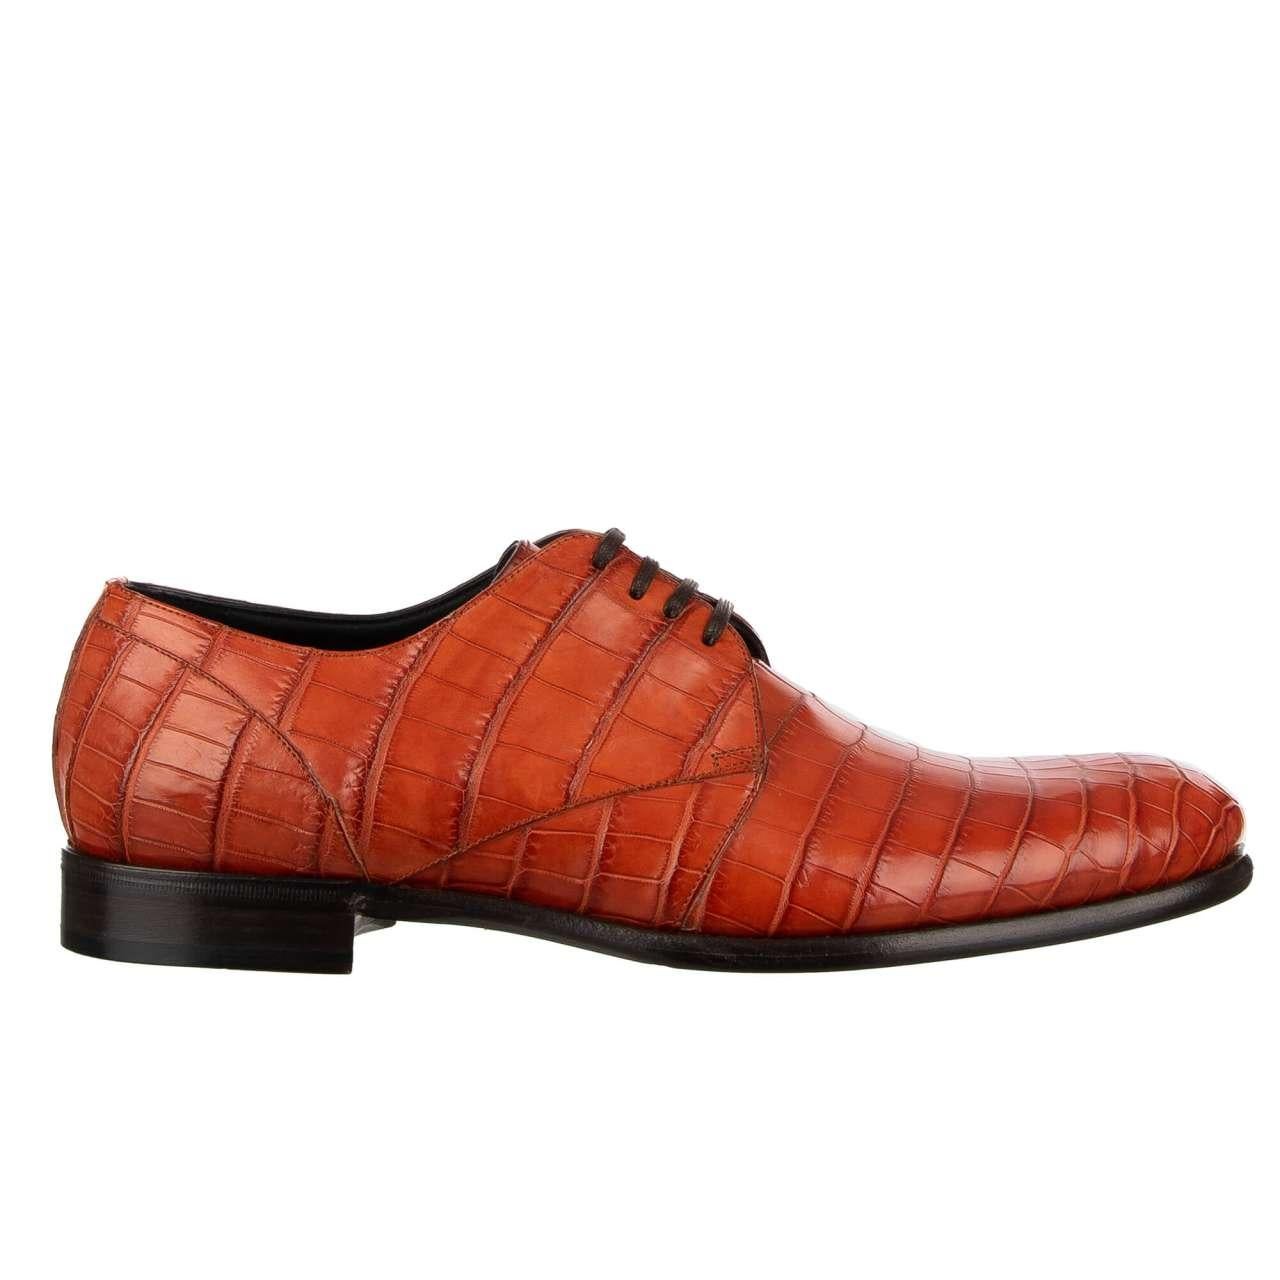 Dolce & Gabbana Formal Crocodile Leather Derby Shoes NAPOLI Orange EUR 41 For Sale 3